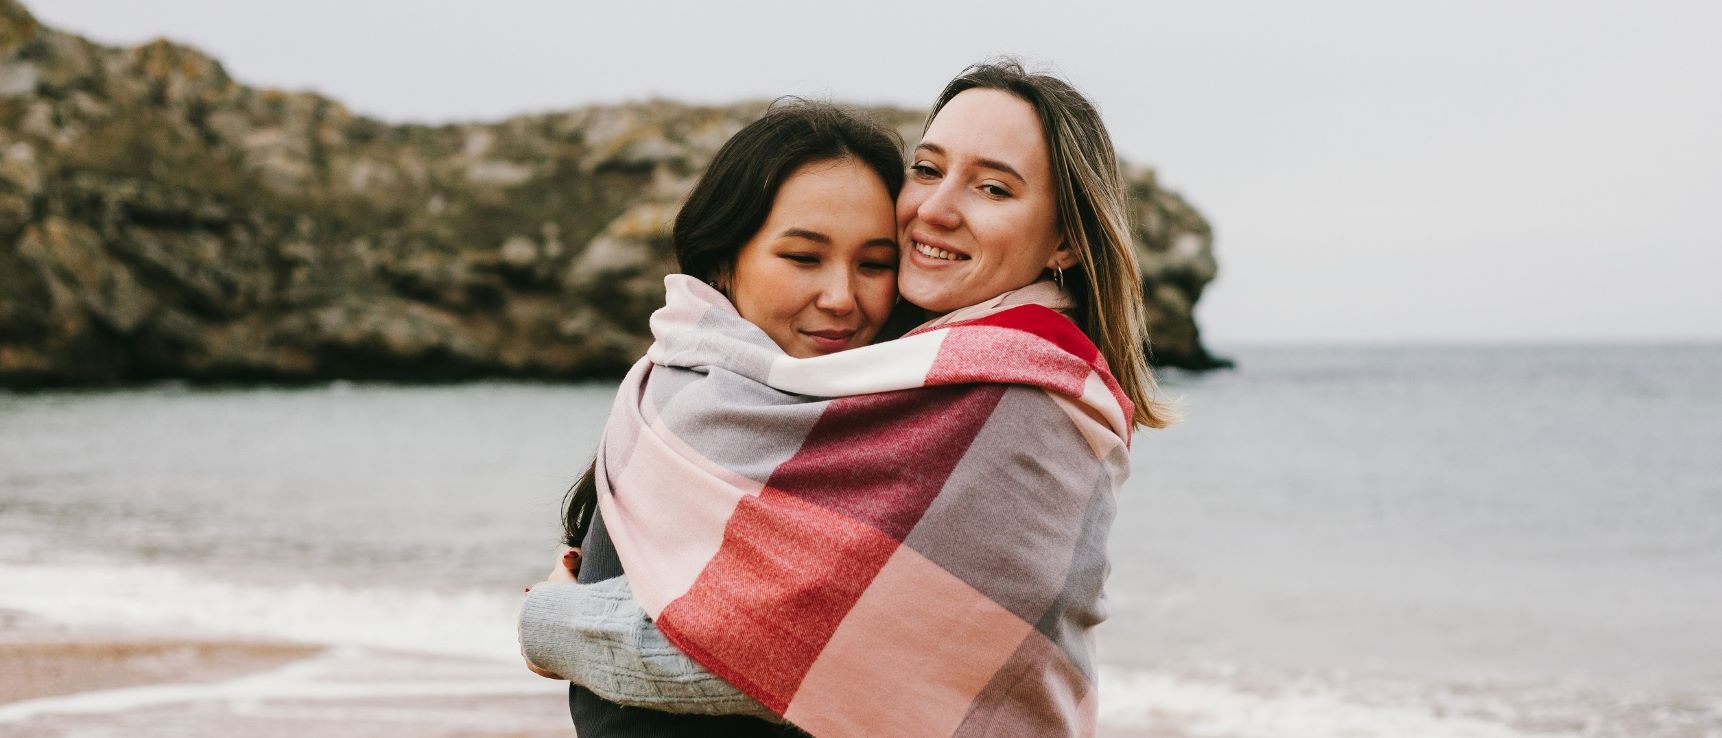 Two women hug on a beach